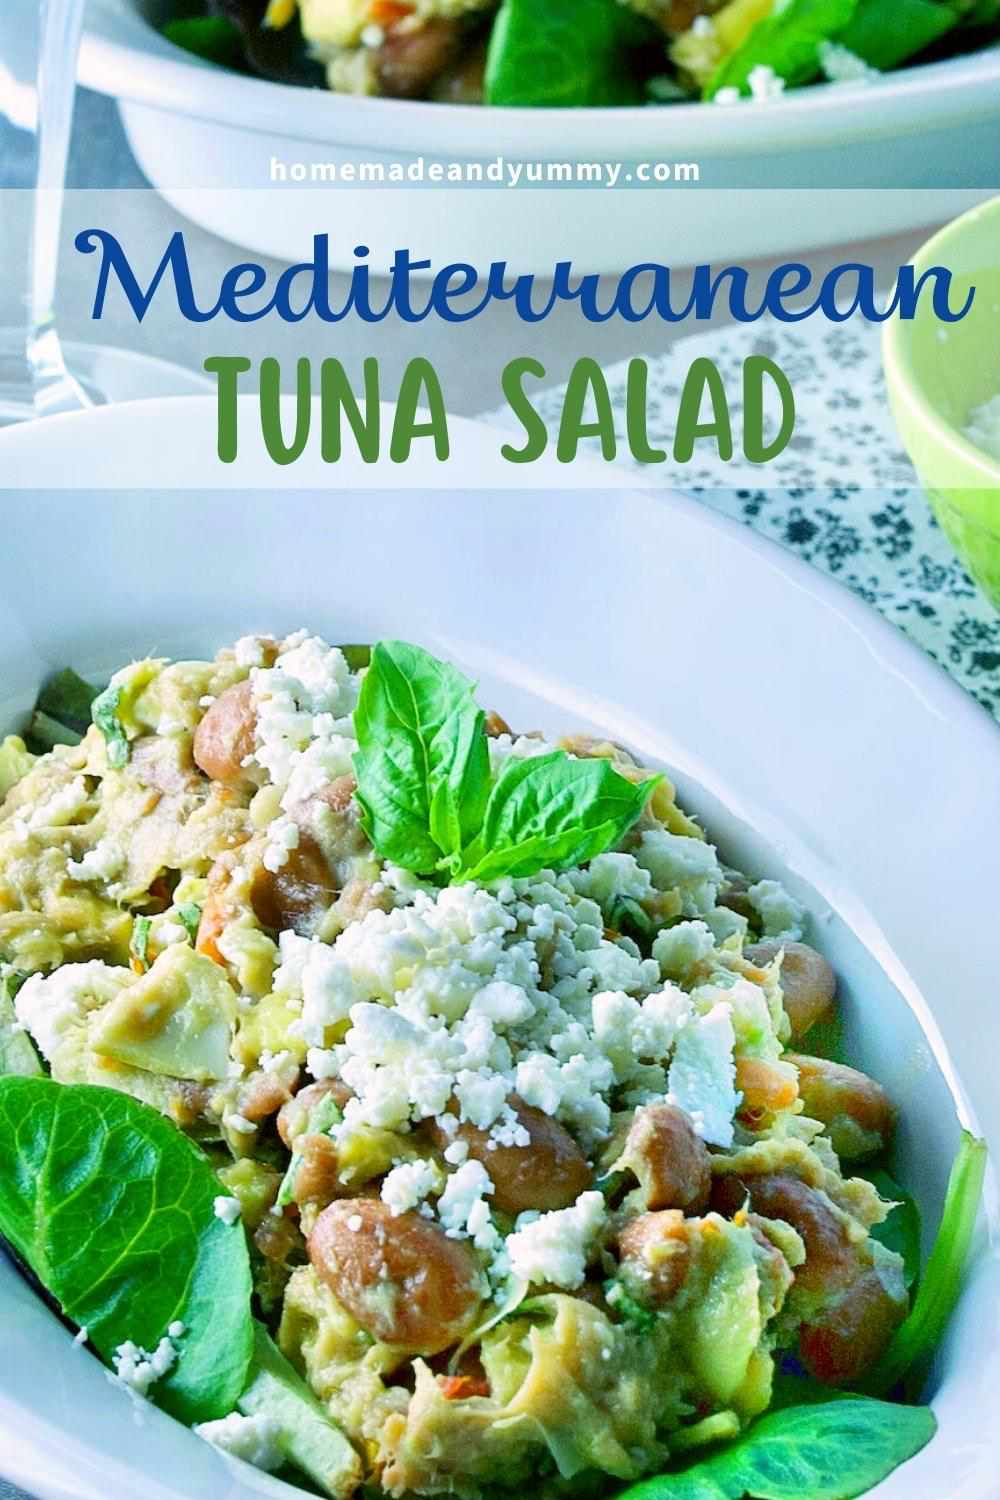 Mediterranean Tuan Salad pin.